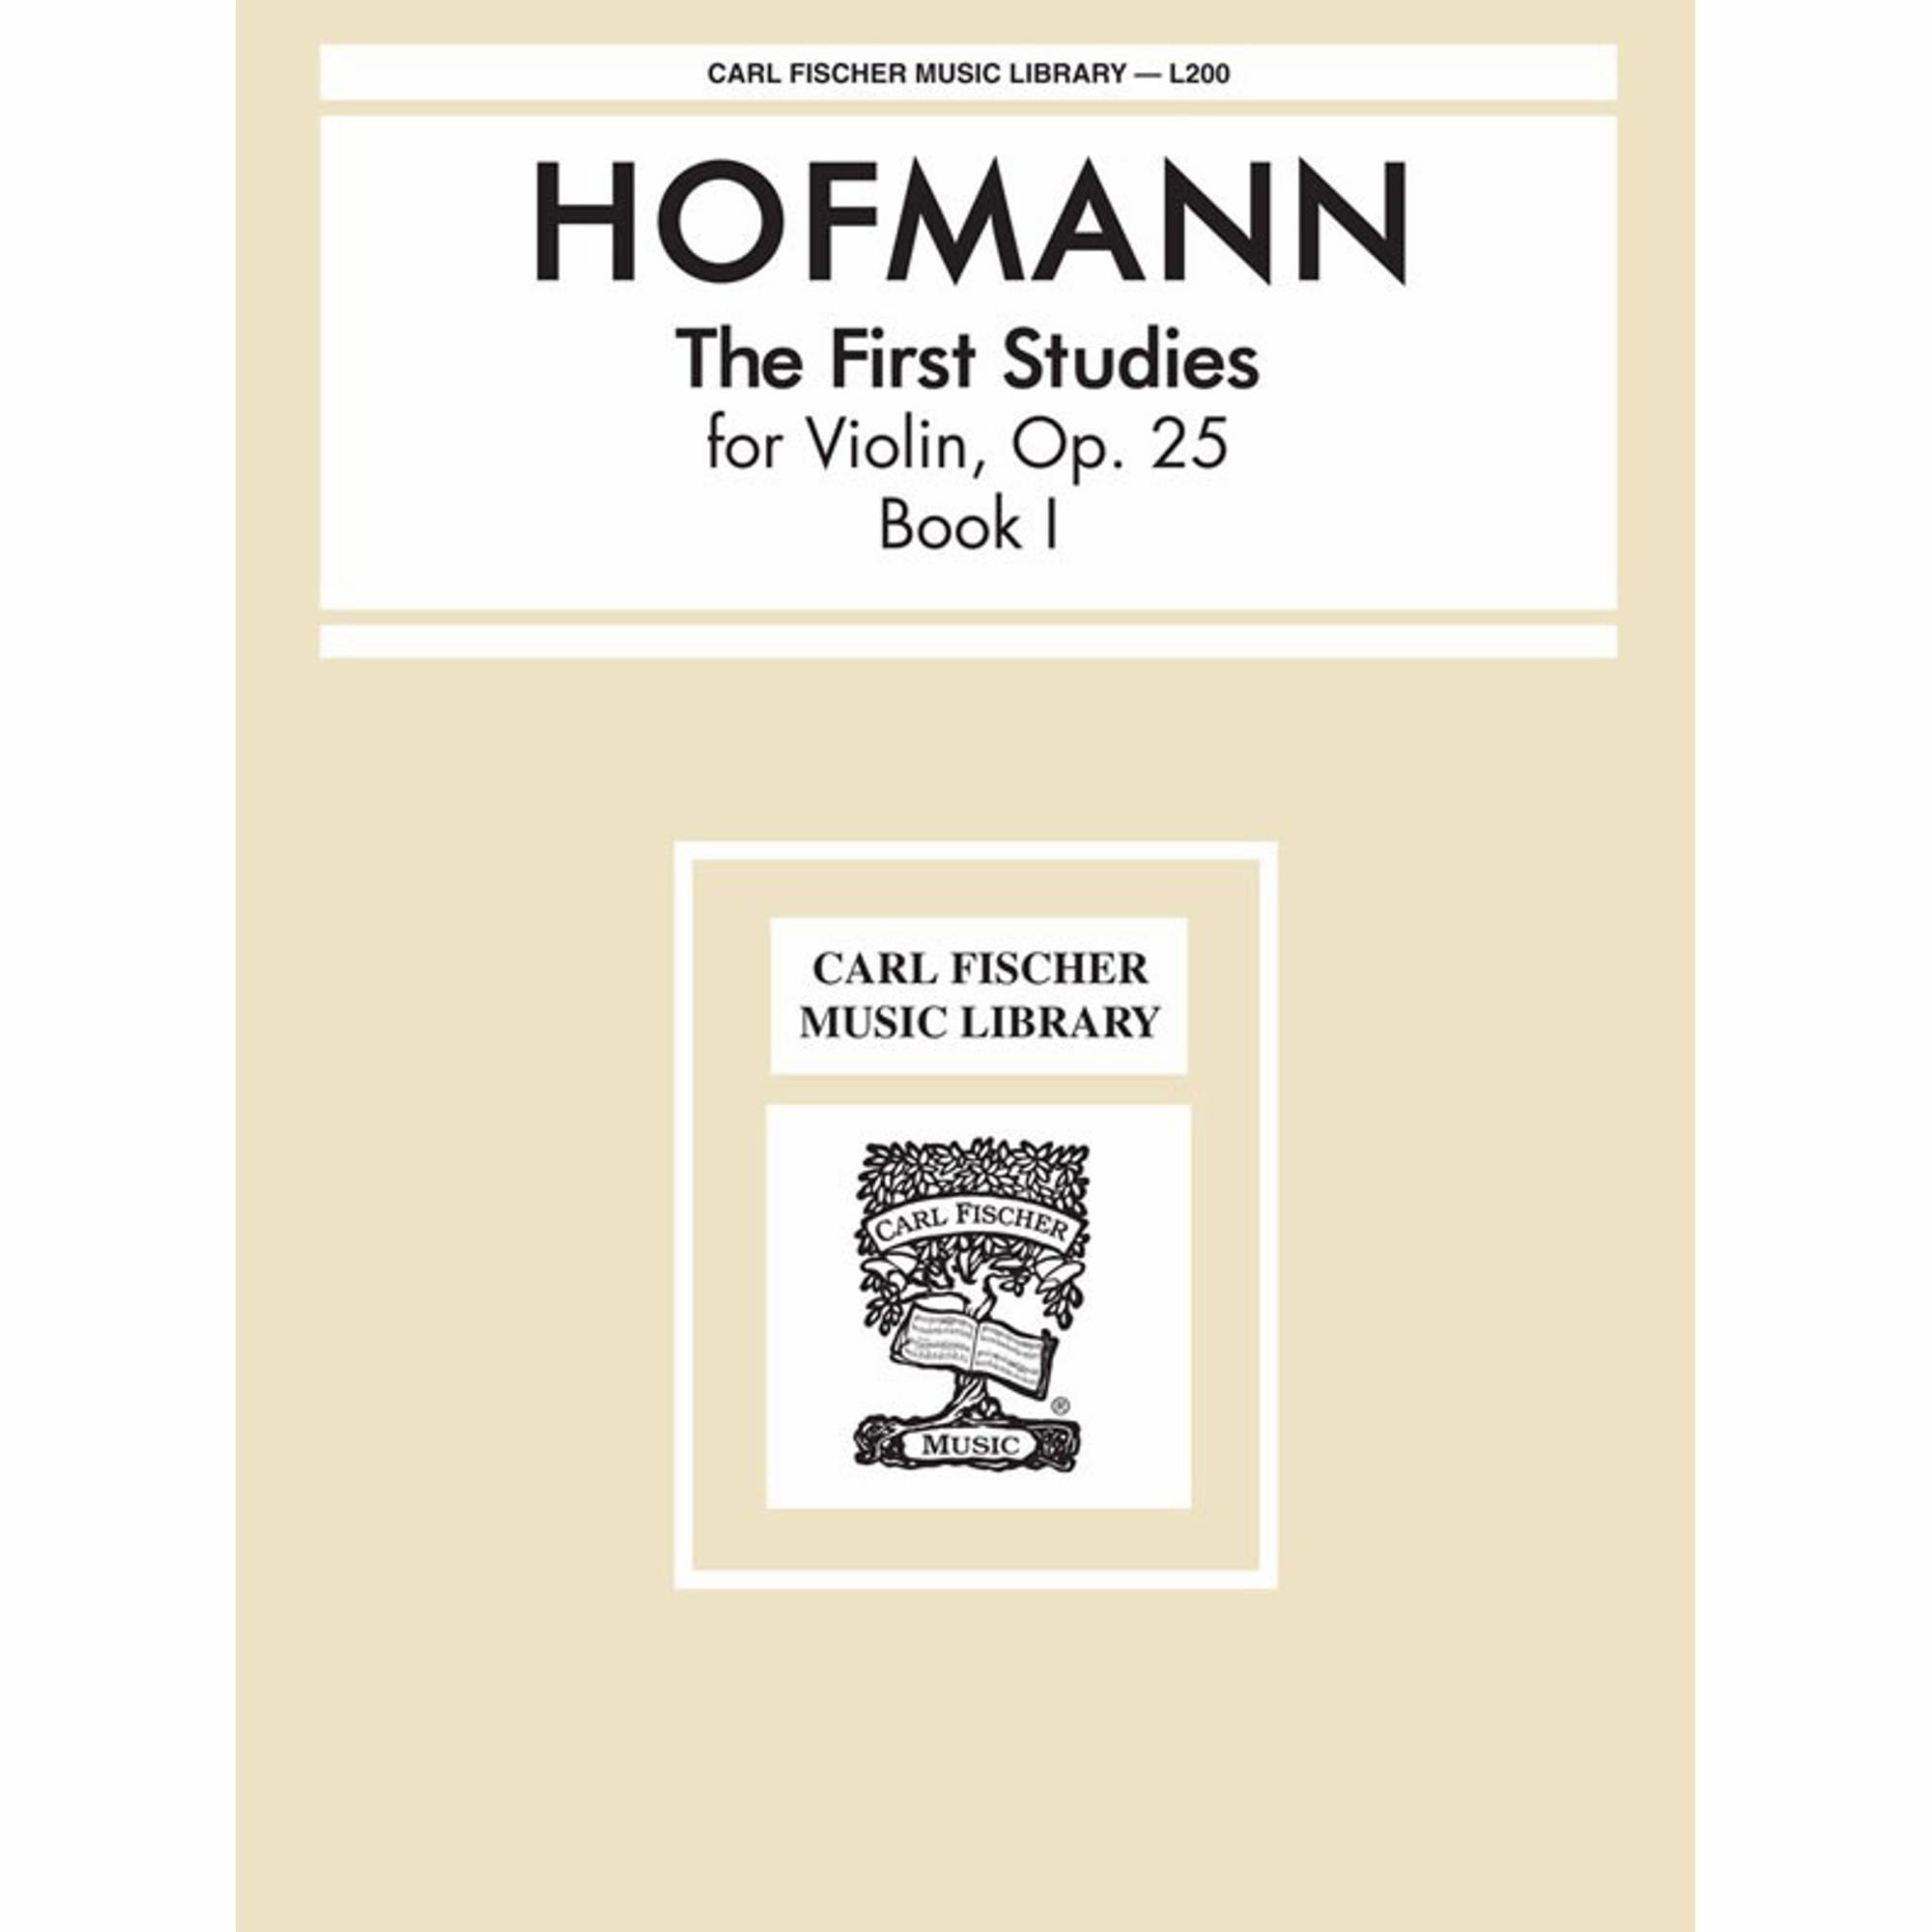 Hoffman -- The First Studies, Op. 25, Book 1, for Violin